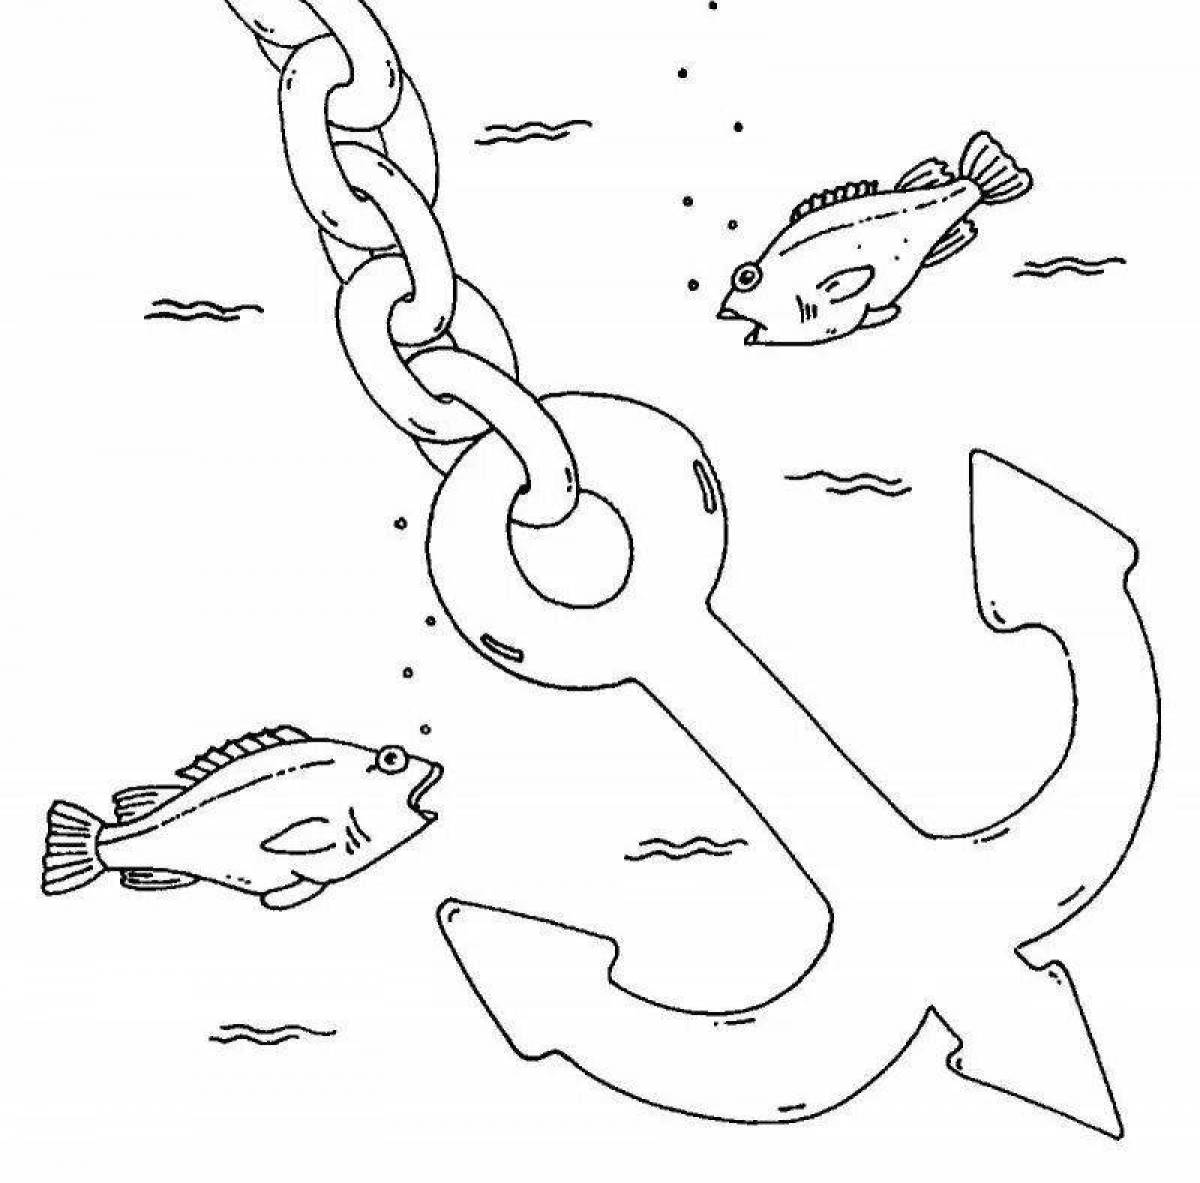 A fun anchor coloring book for kids